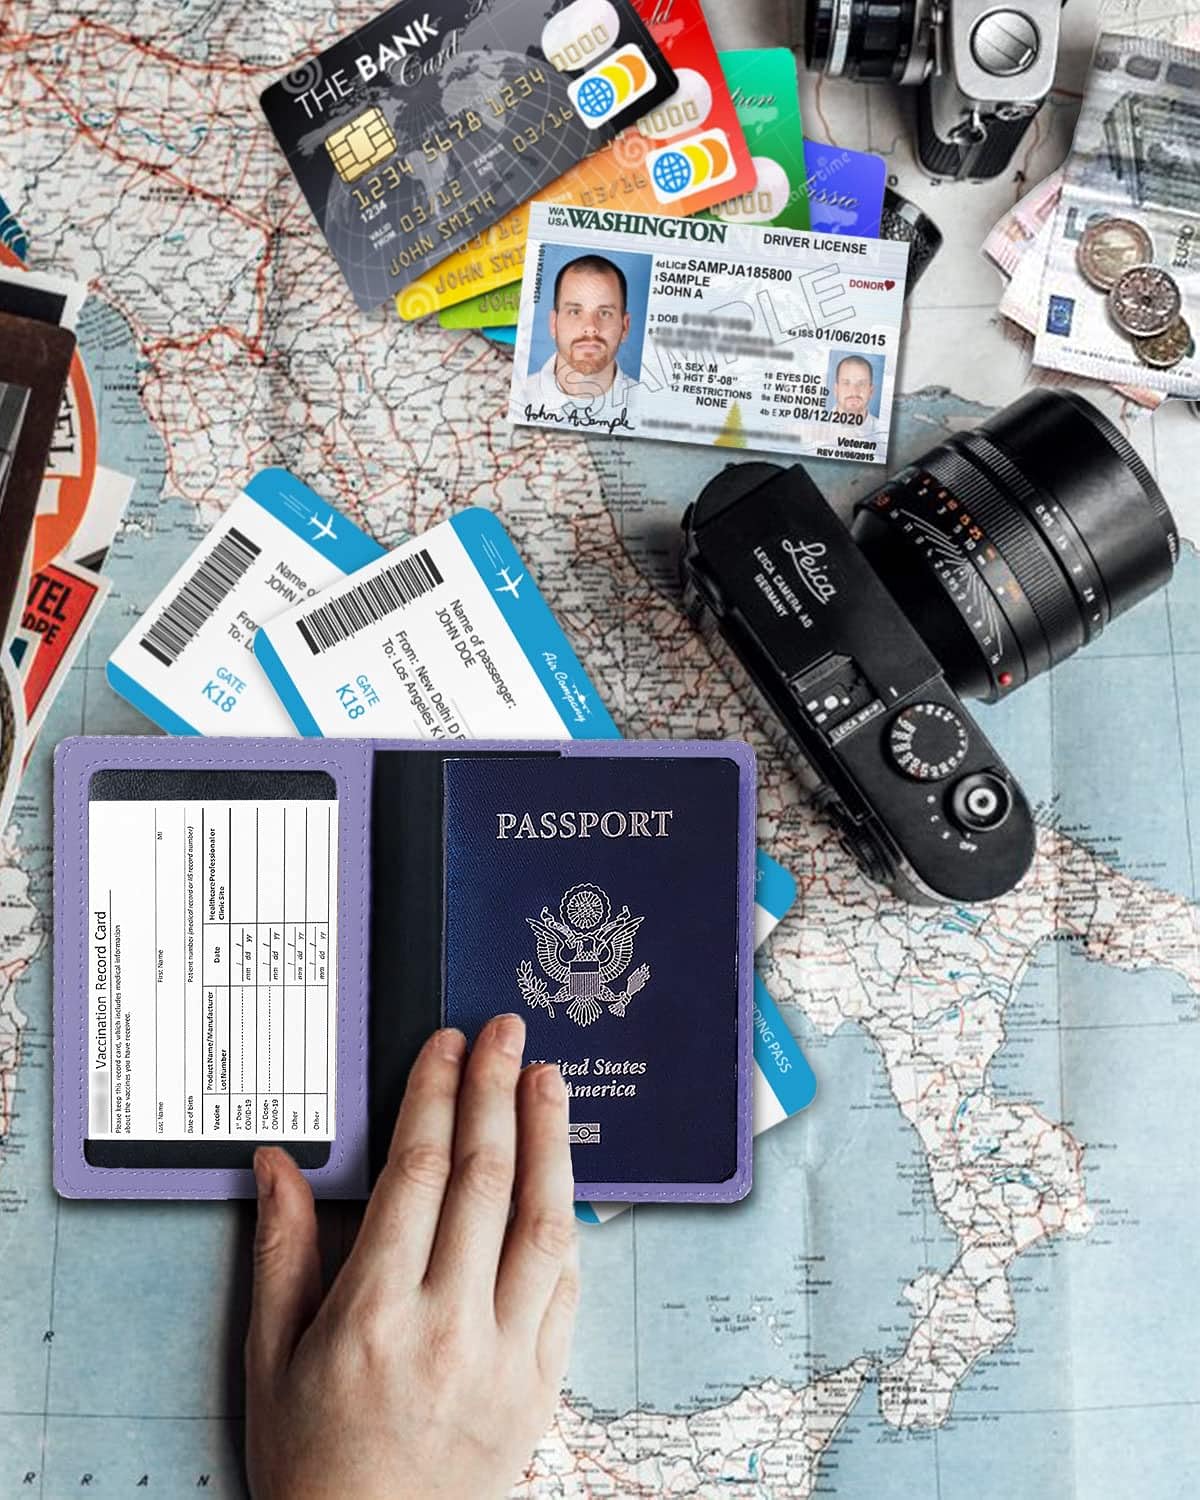 Passport Holder,Luggage Tag,Passport and Vaccine Card Holder Combo,Passport Holder With Vaccine Card Slot,Travel Essentials,Passport Cover,Passport Case,Passport Wallet,Passport Book,Travel Gifts